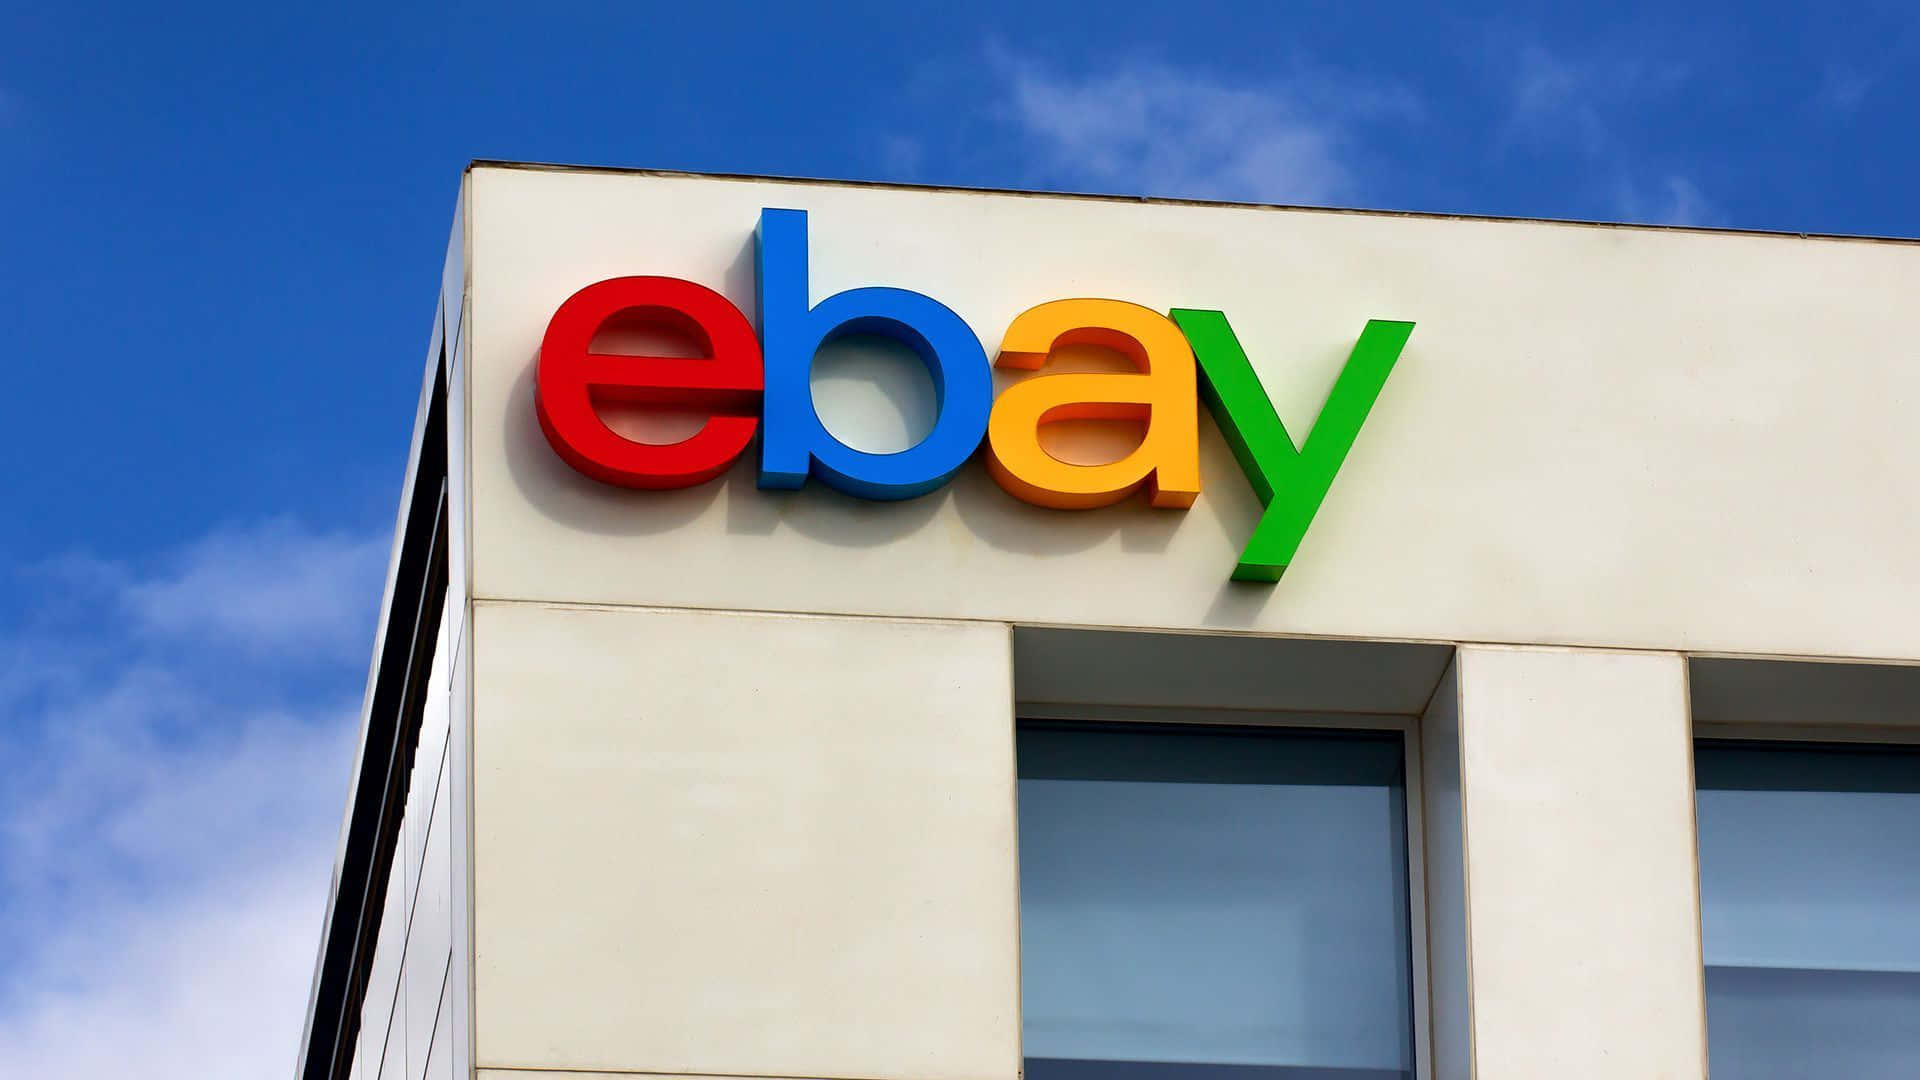 eBay UK Corporate Building Facade Lit with Logo Wallpaper